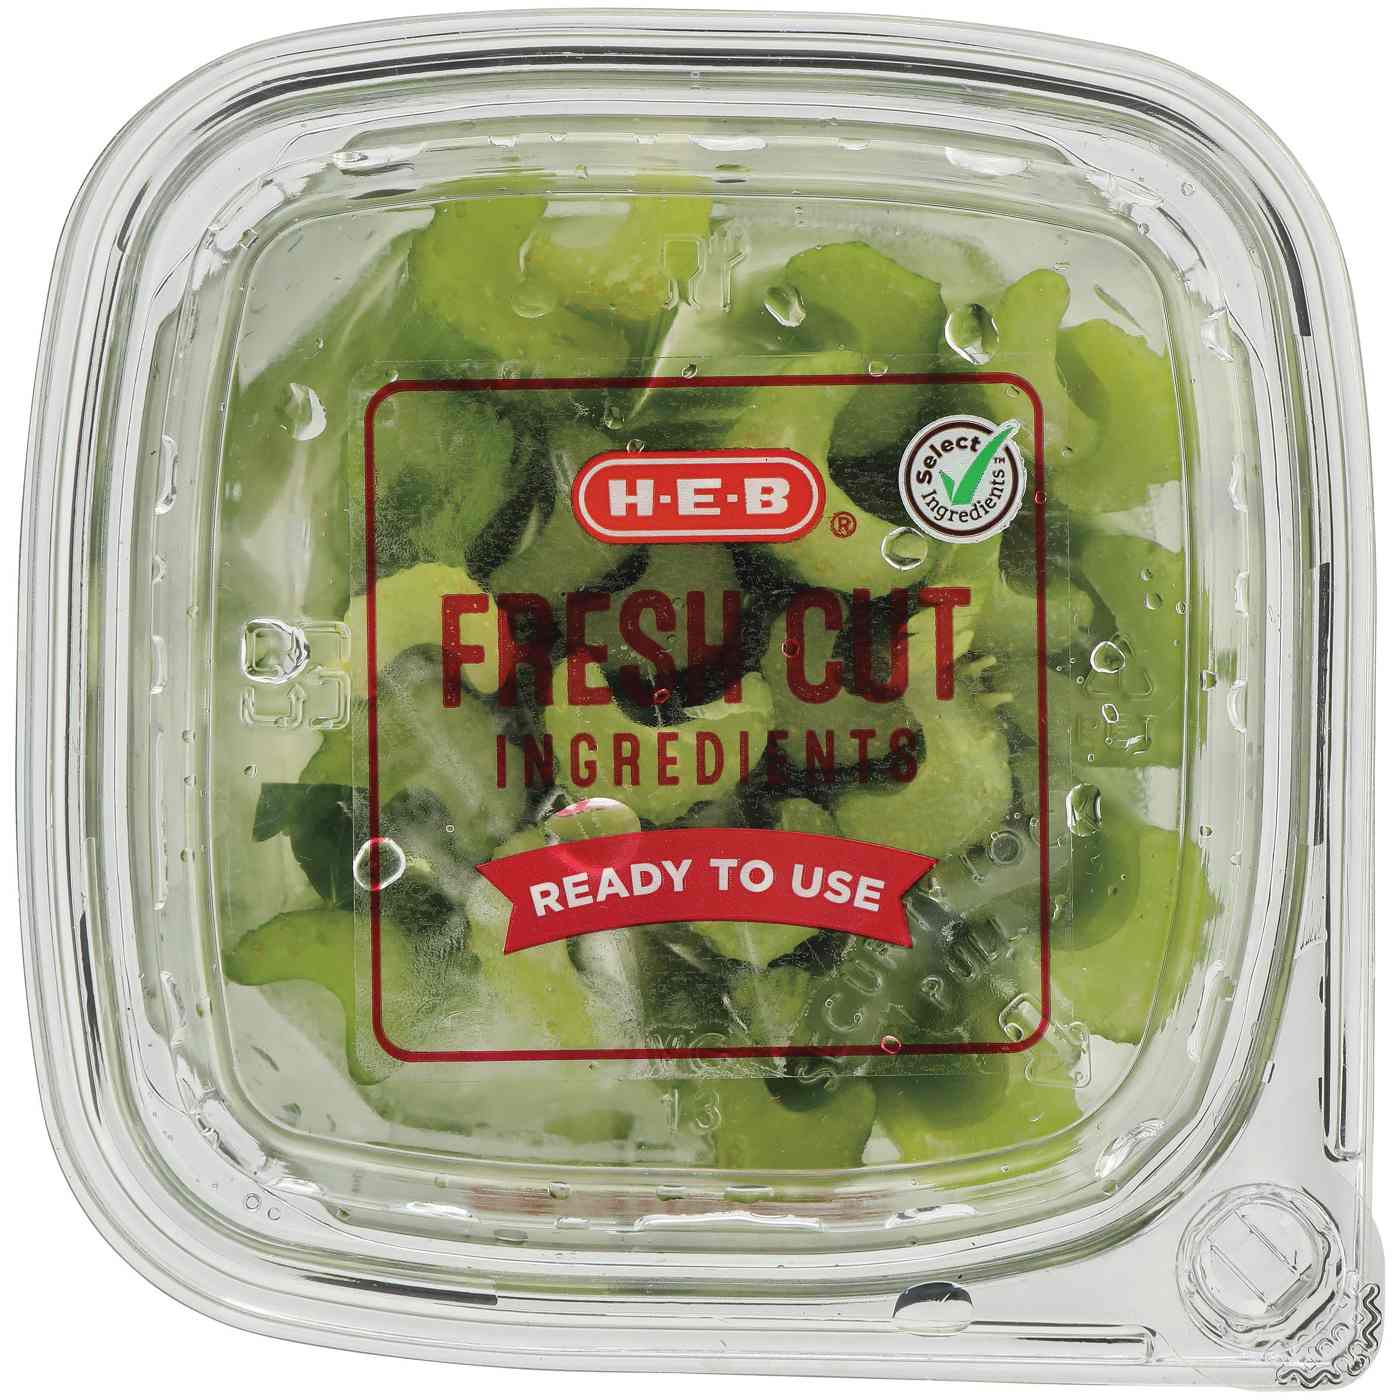 H-E-B Fresh Whole Celery Sticks; image 2 of 2